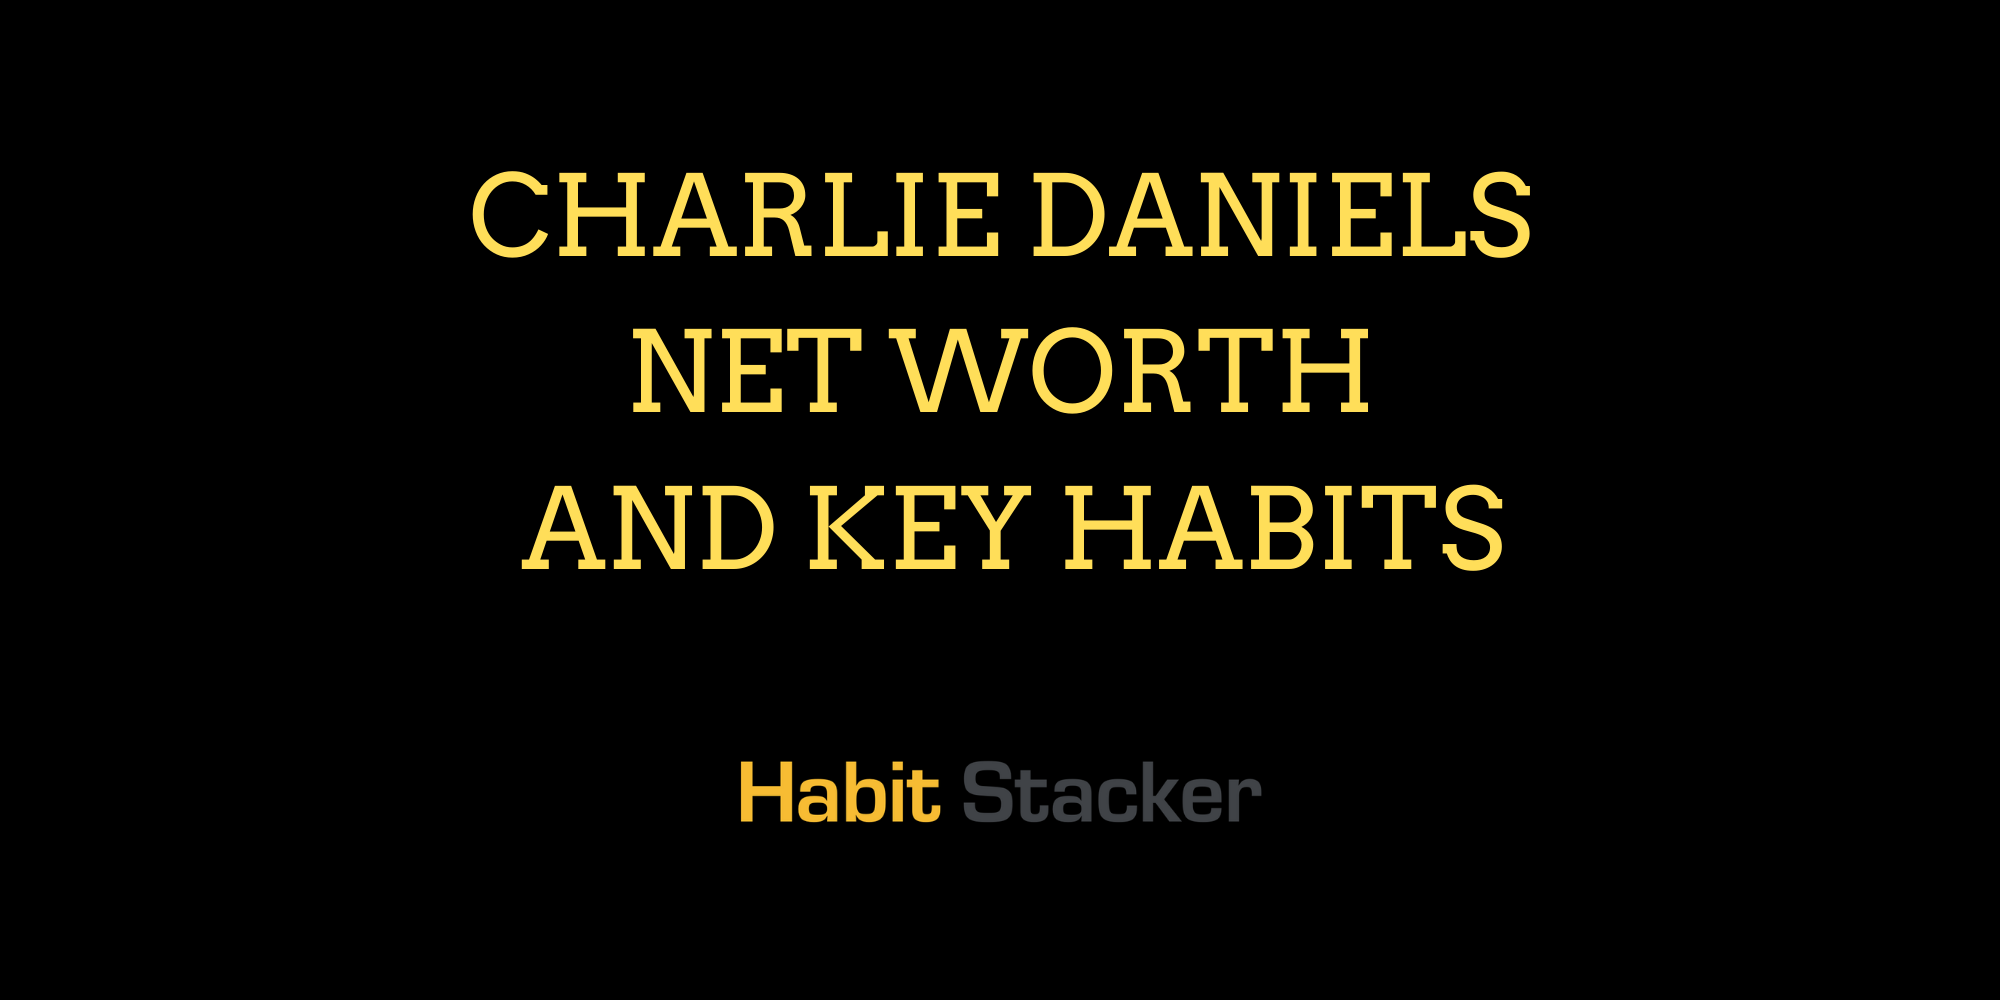 Charlie Daniels Net Worth and Key Habits